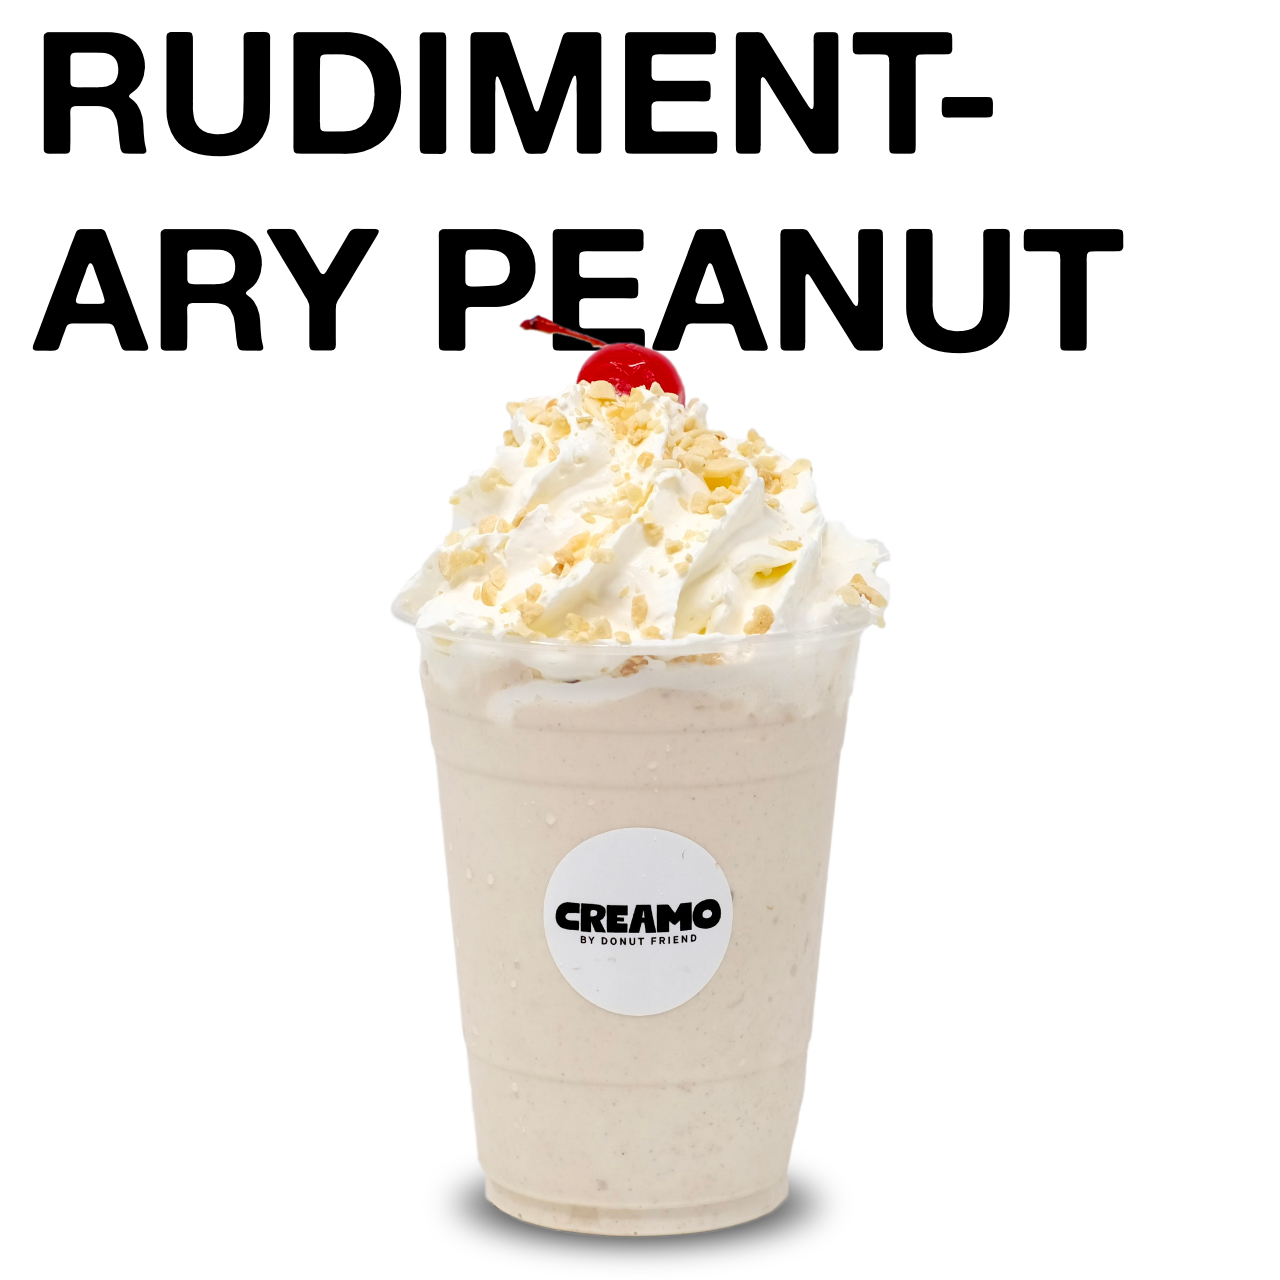 Rudimentary Peanut